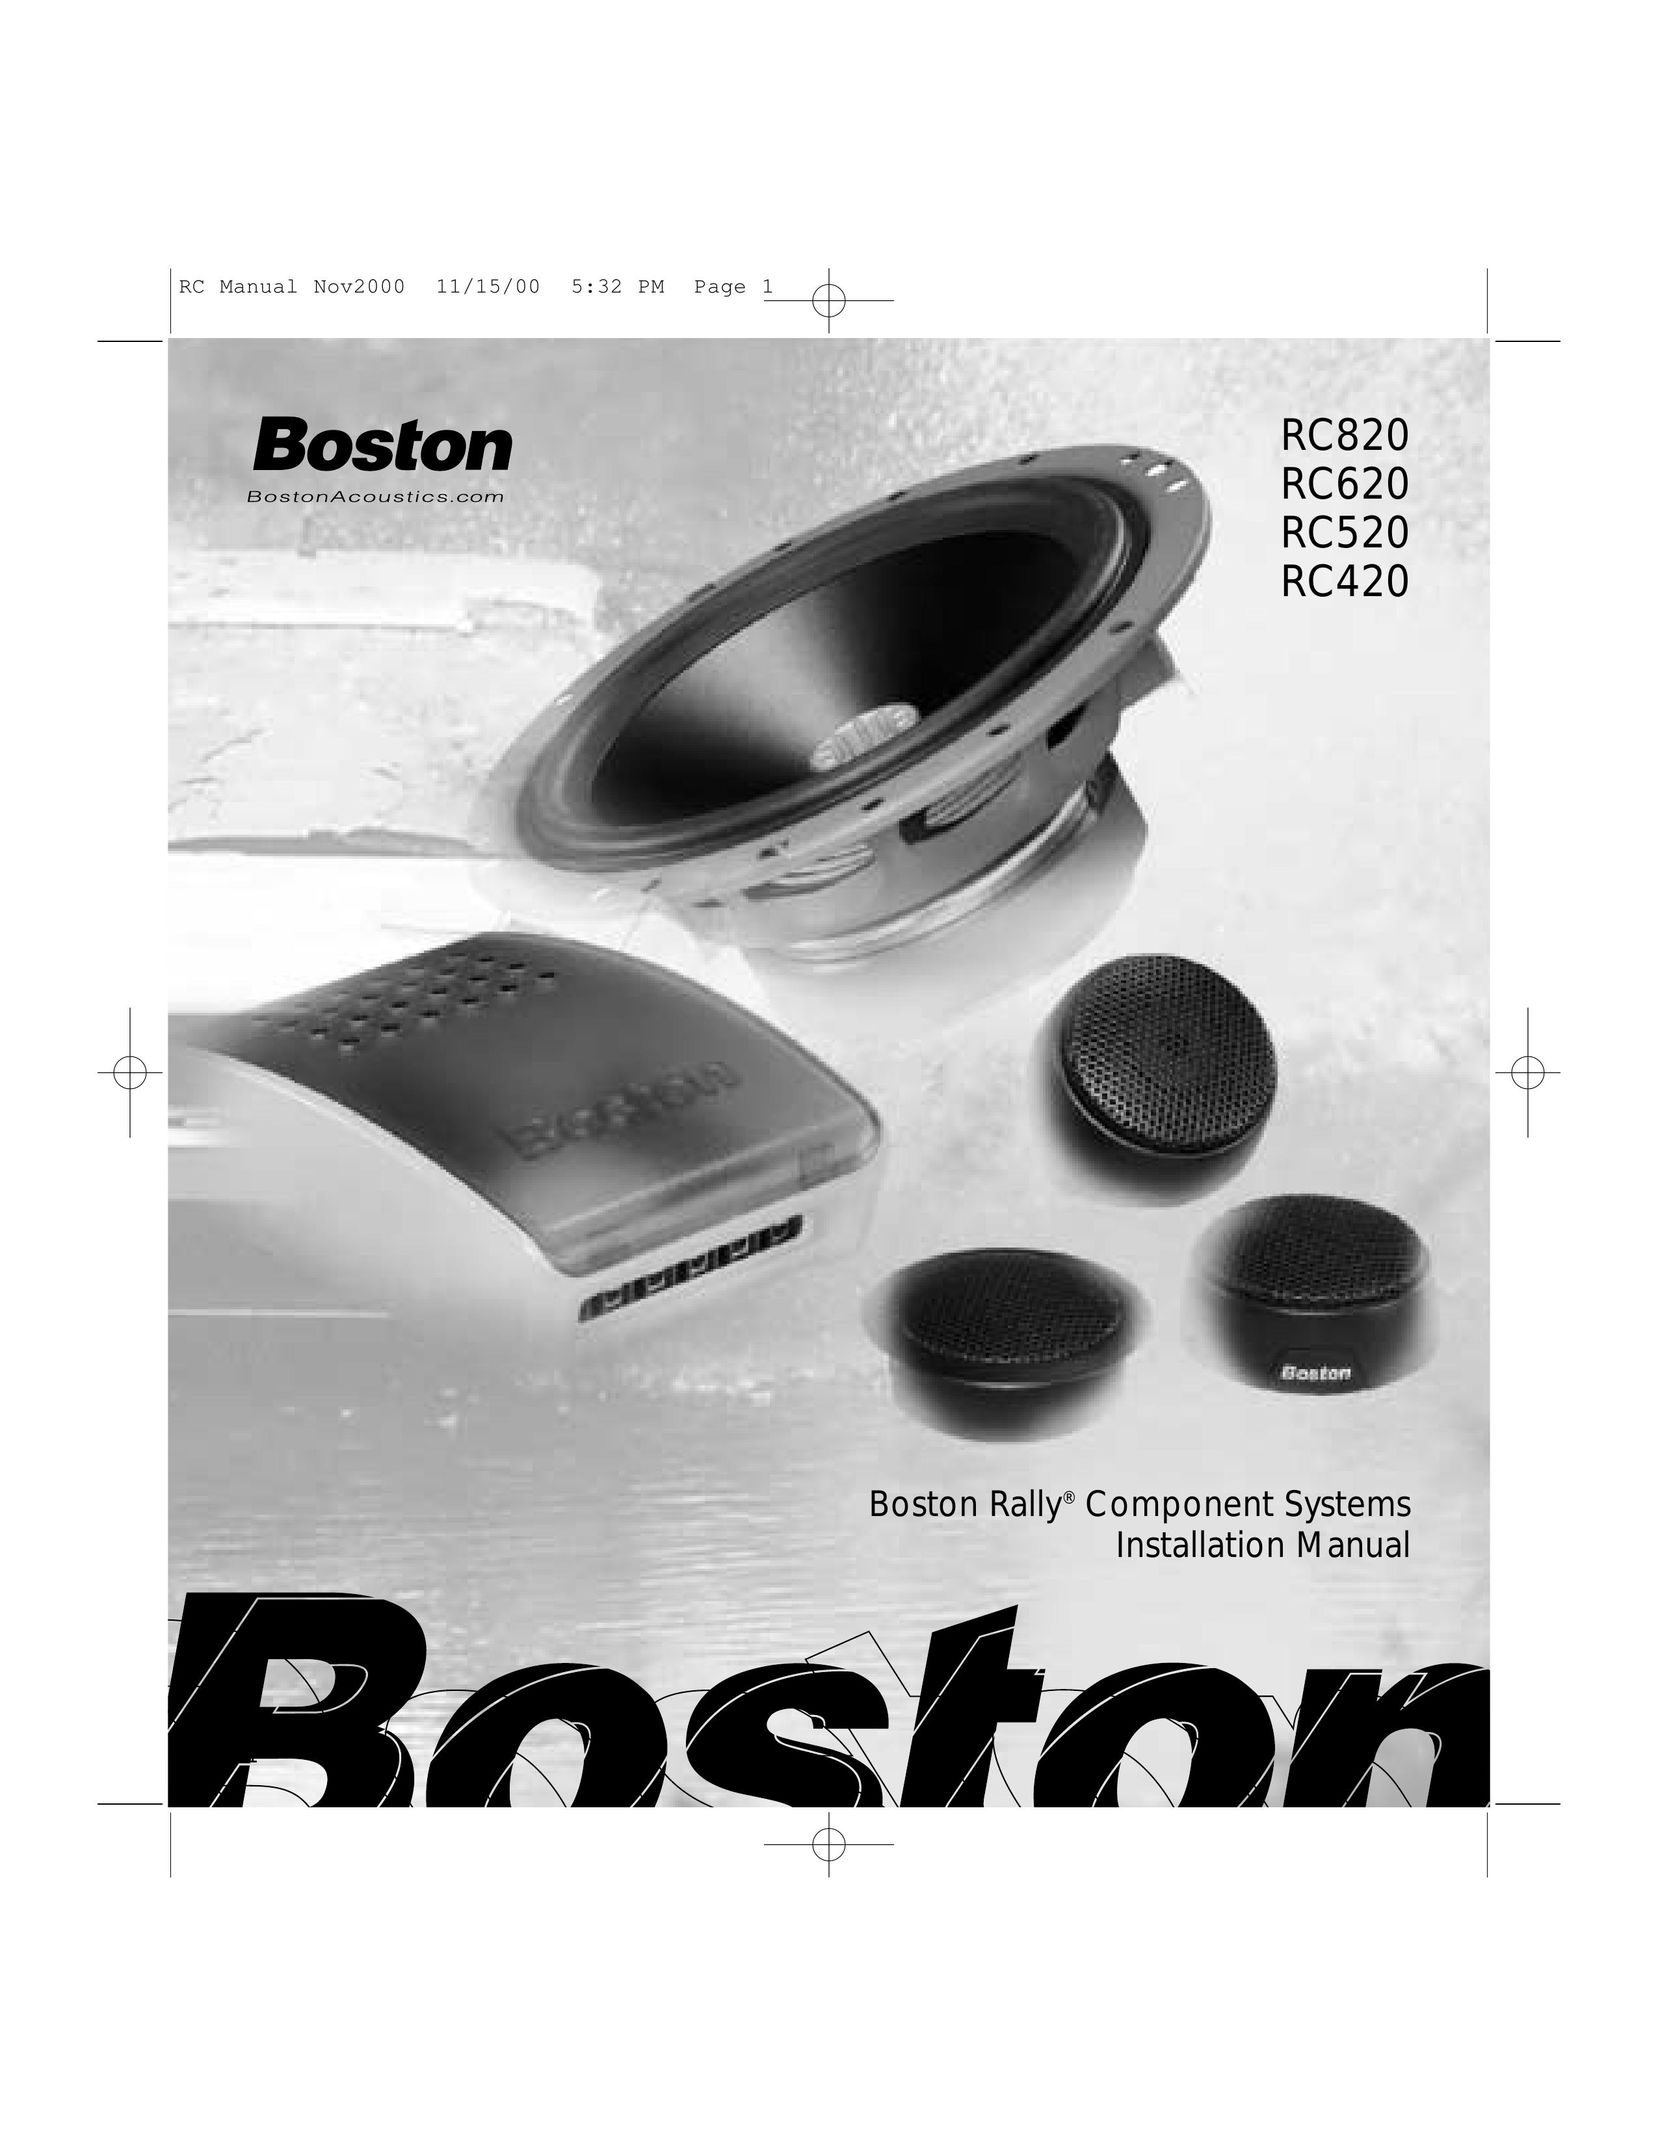 Boston Acoustics RC520 Car Speaker User Manual